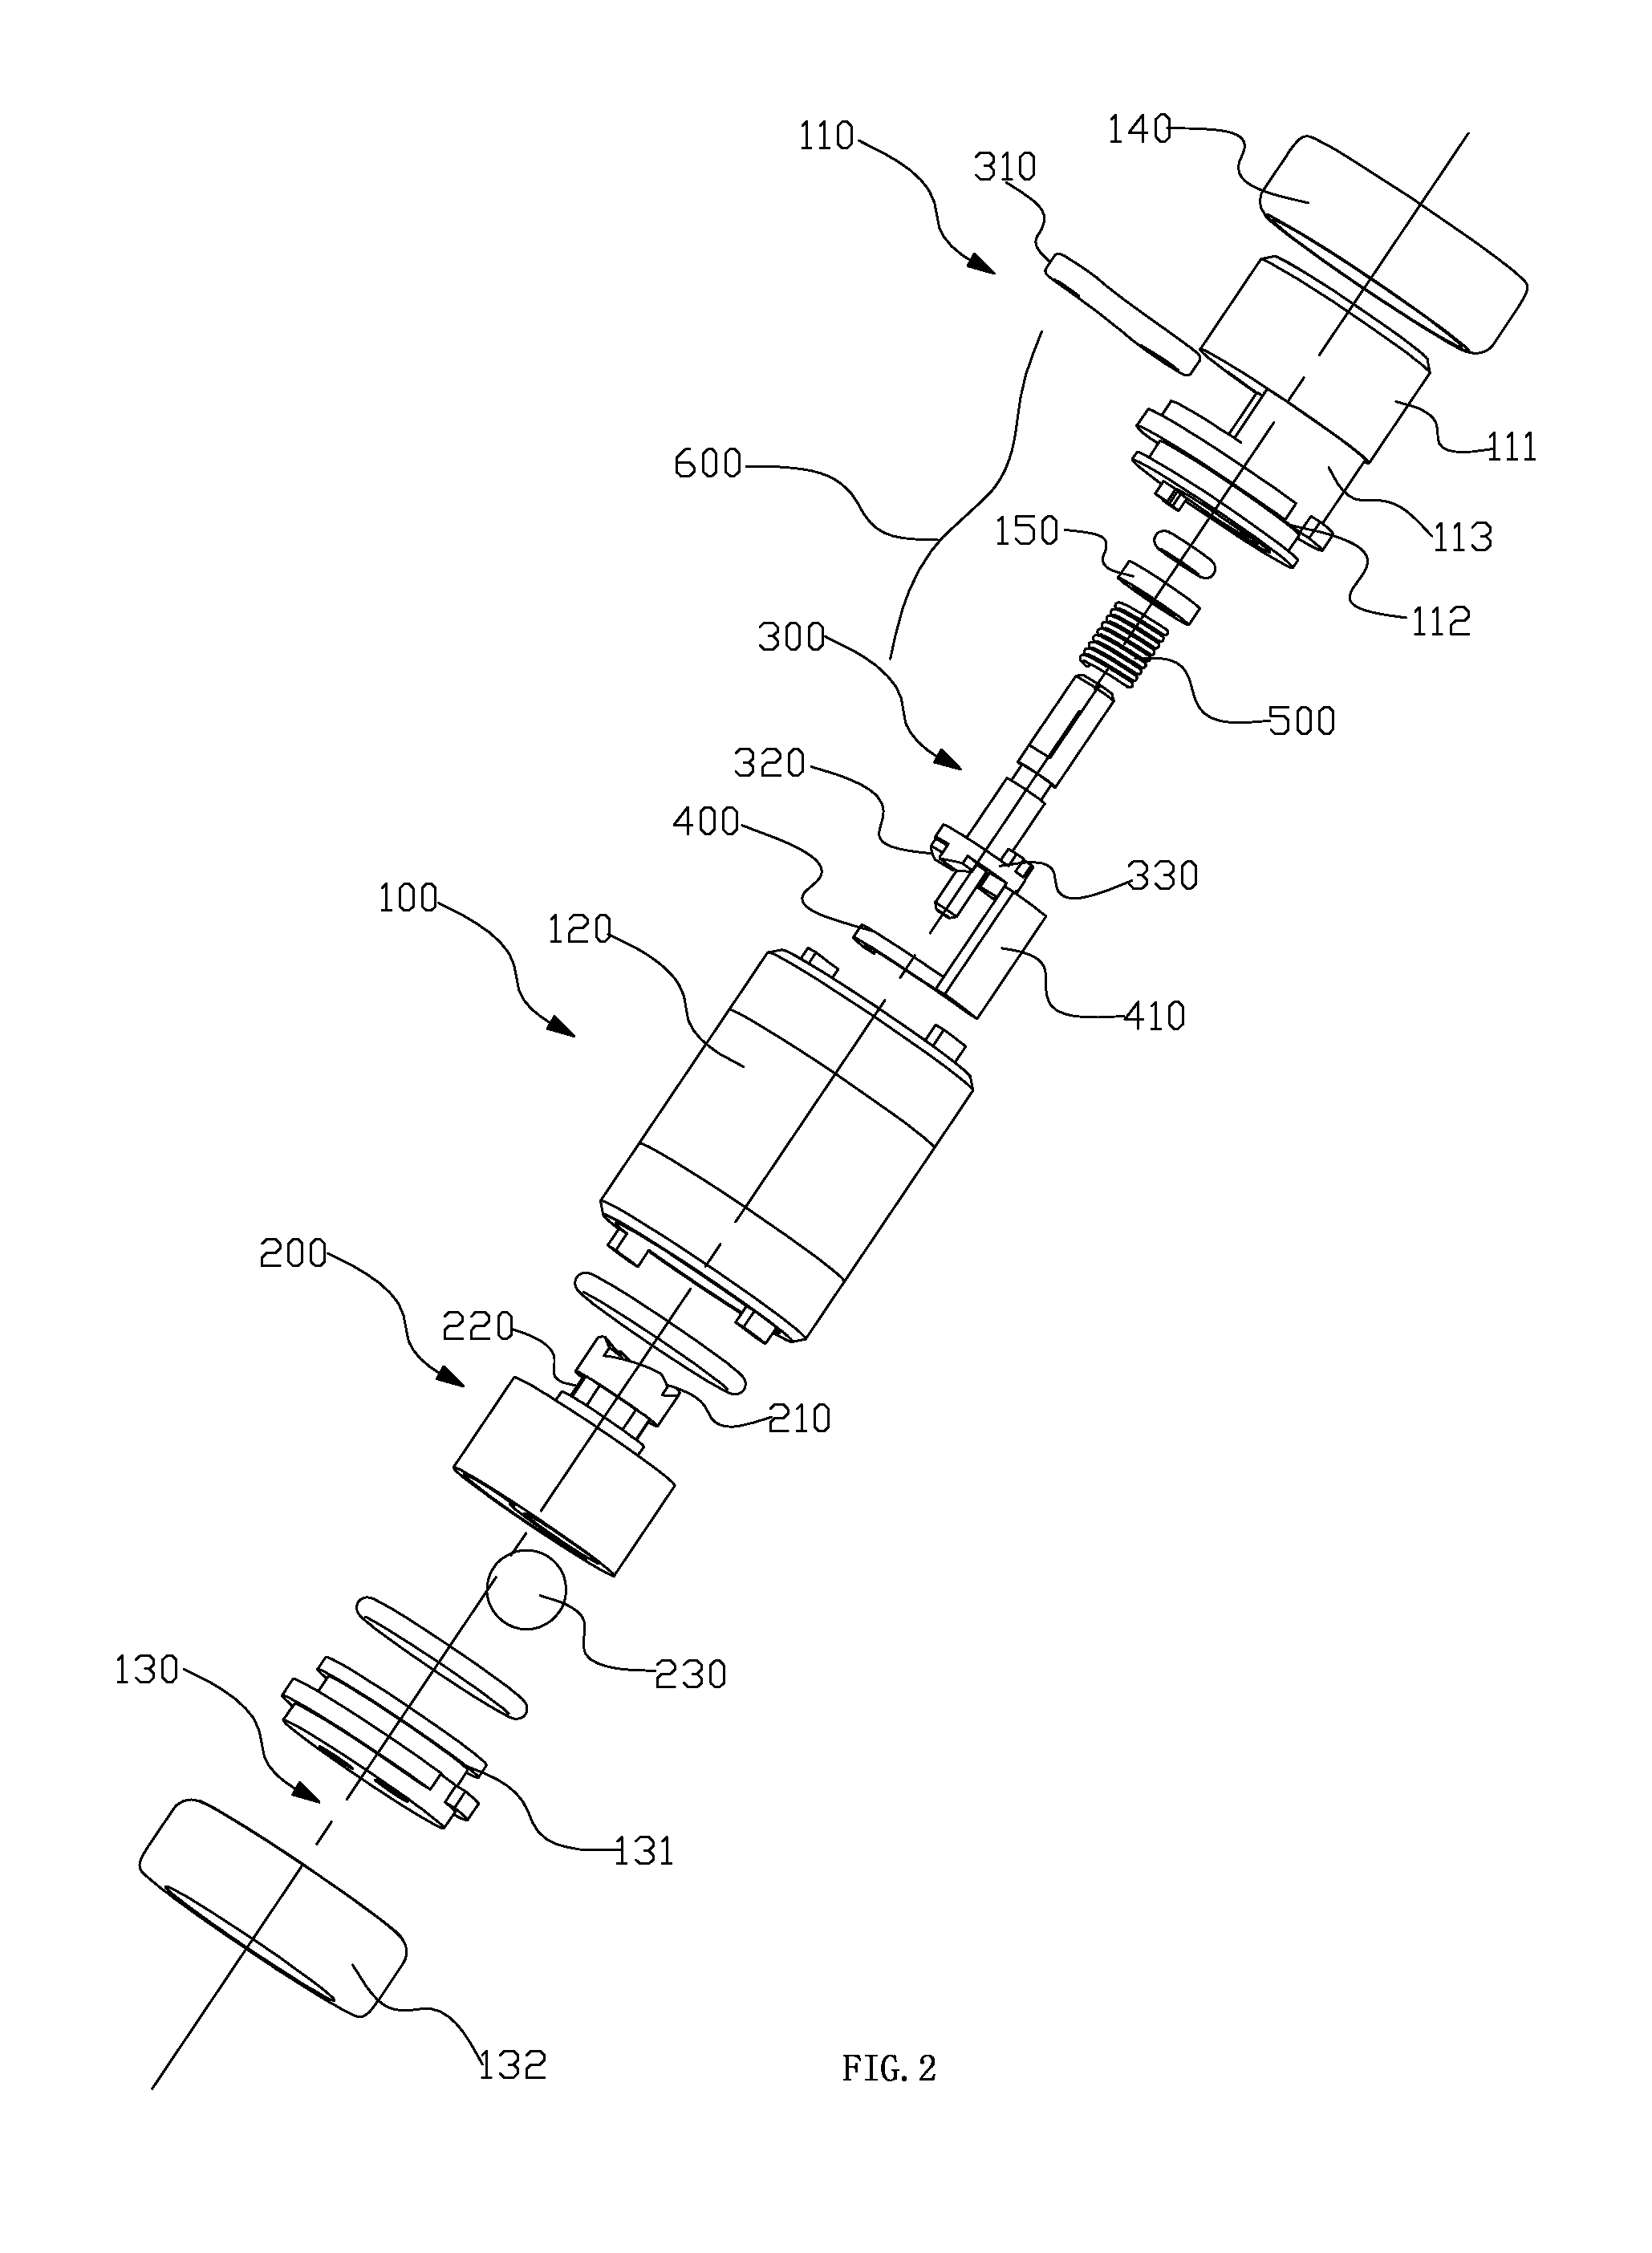 Pulling-wire waterway switching mechanism